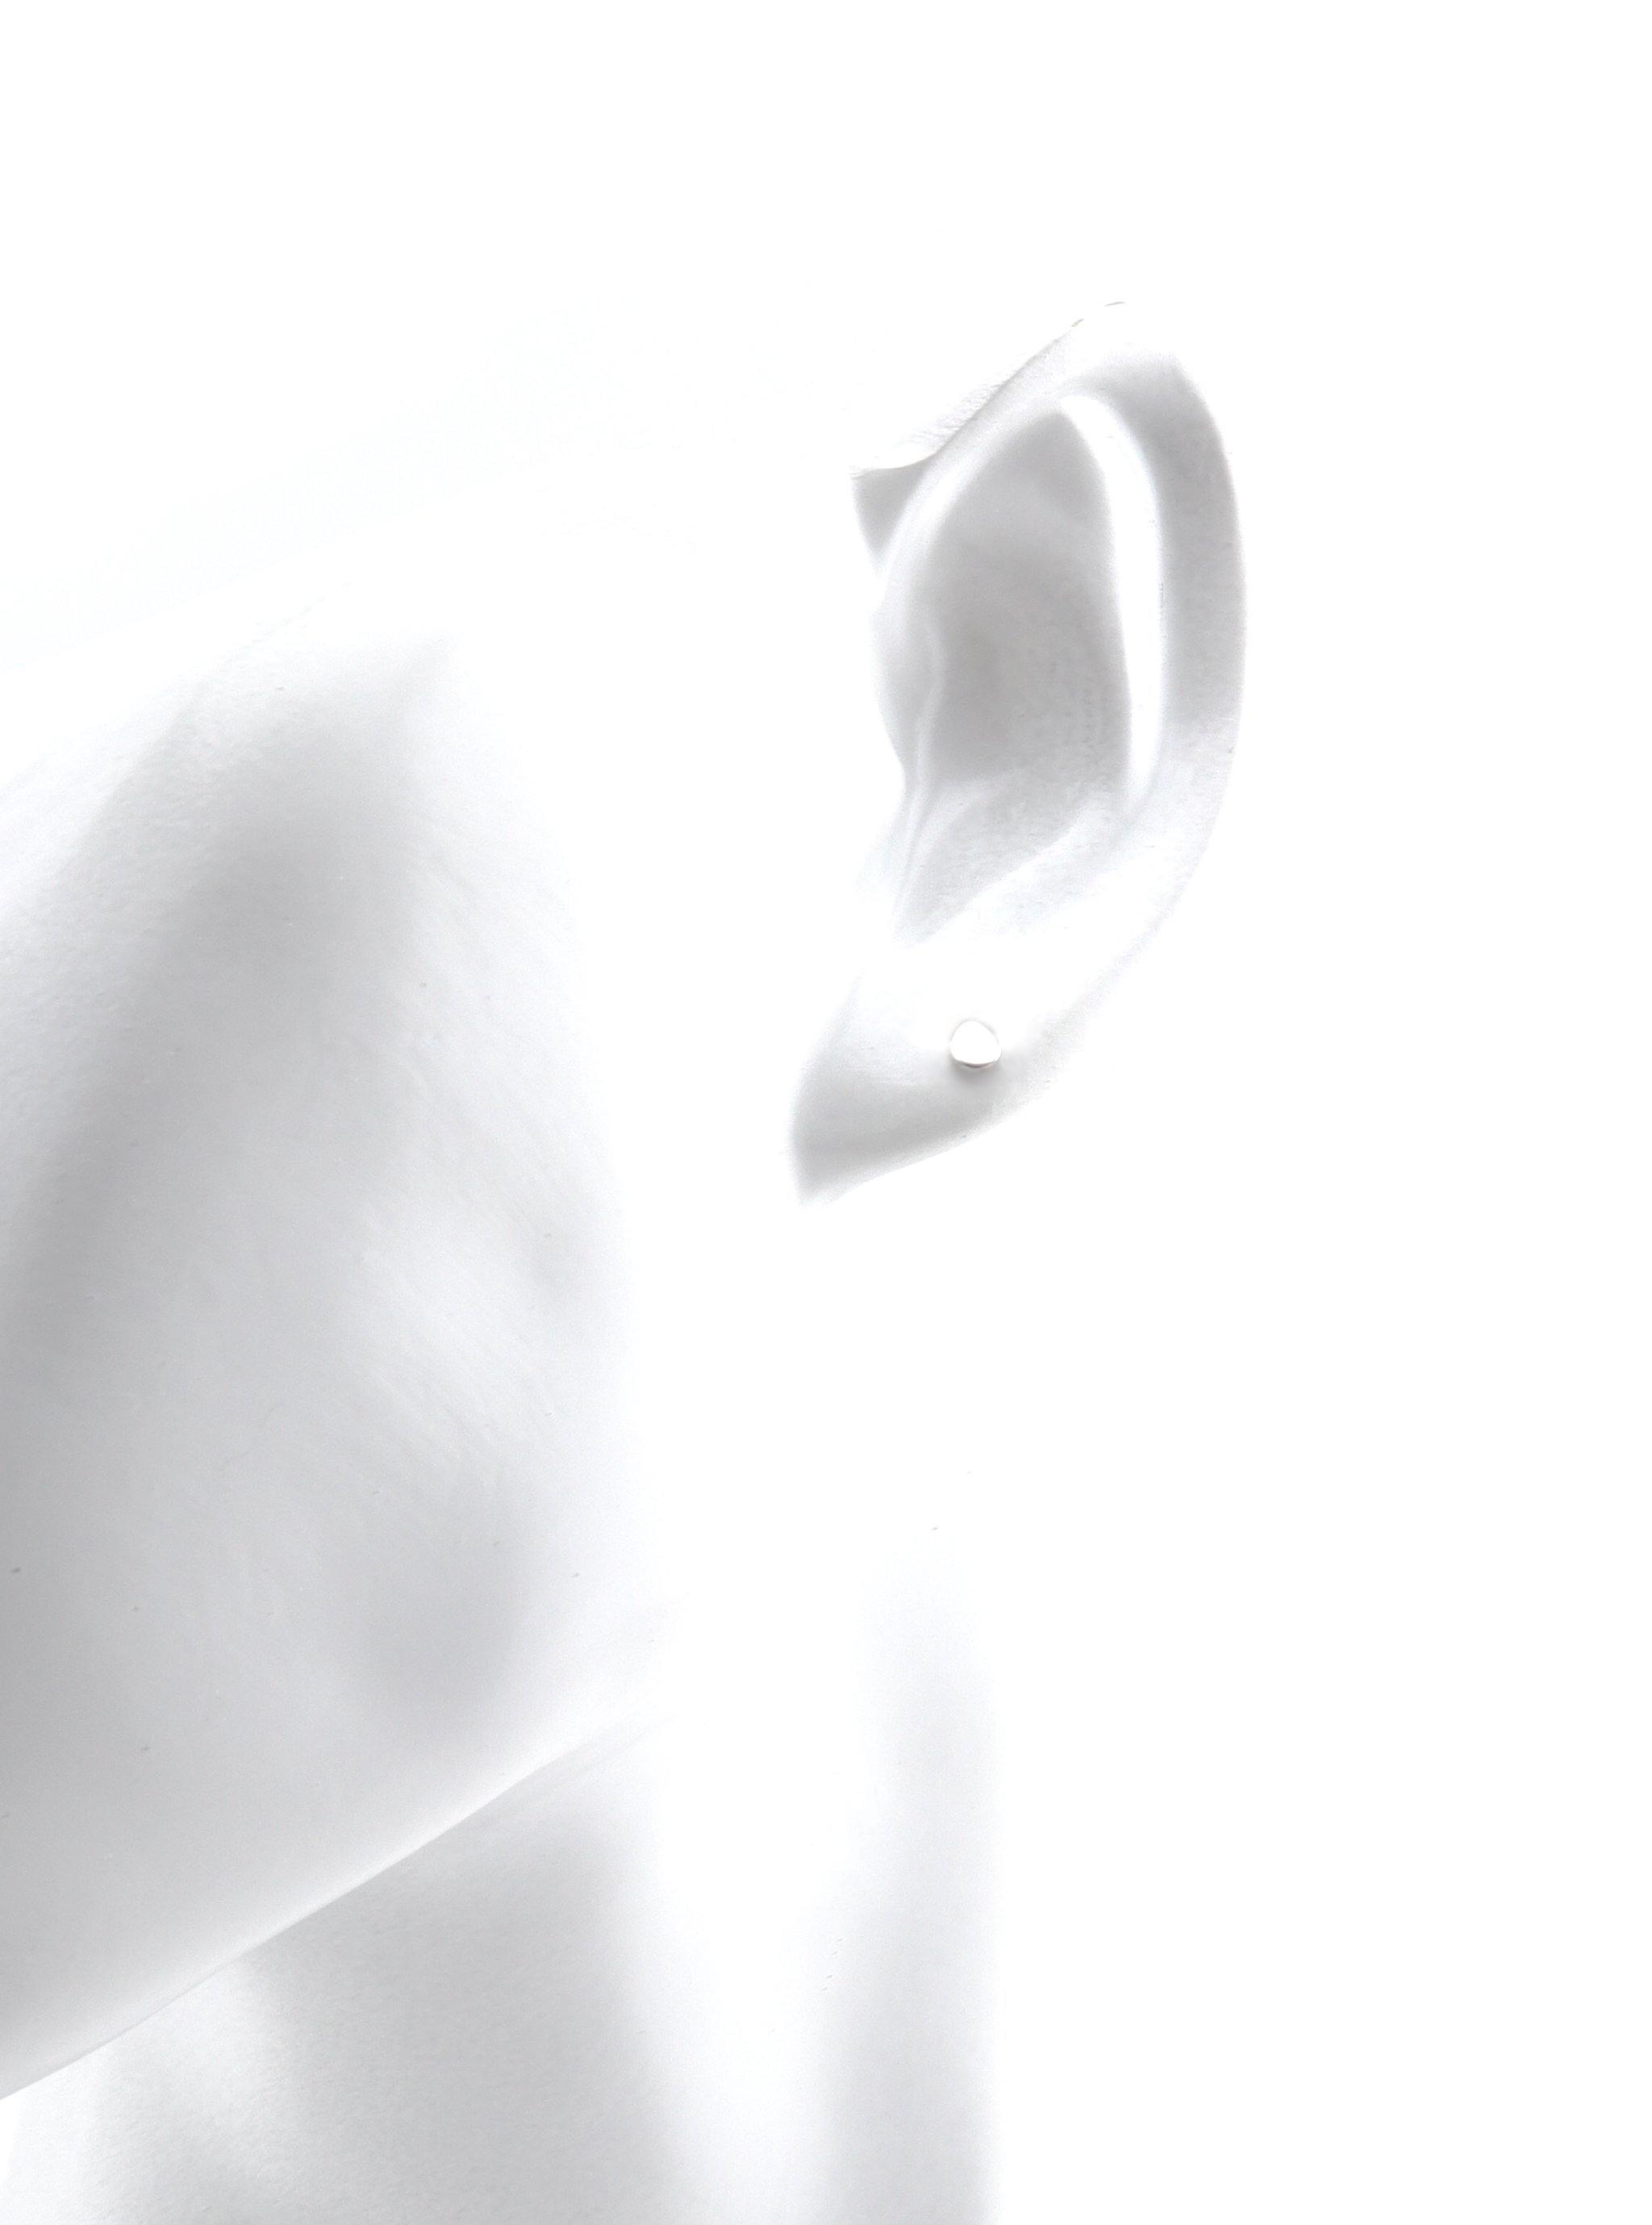 KADI SILVER EARRINGS - Simplique Mode